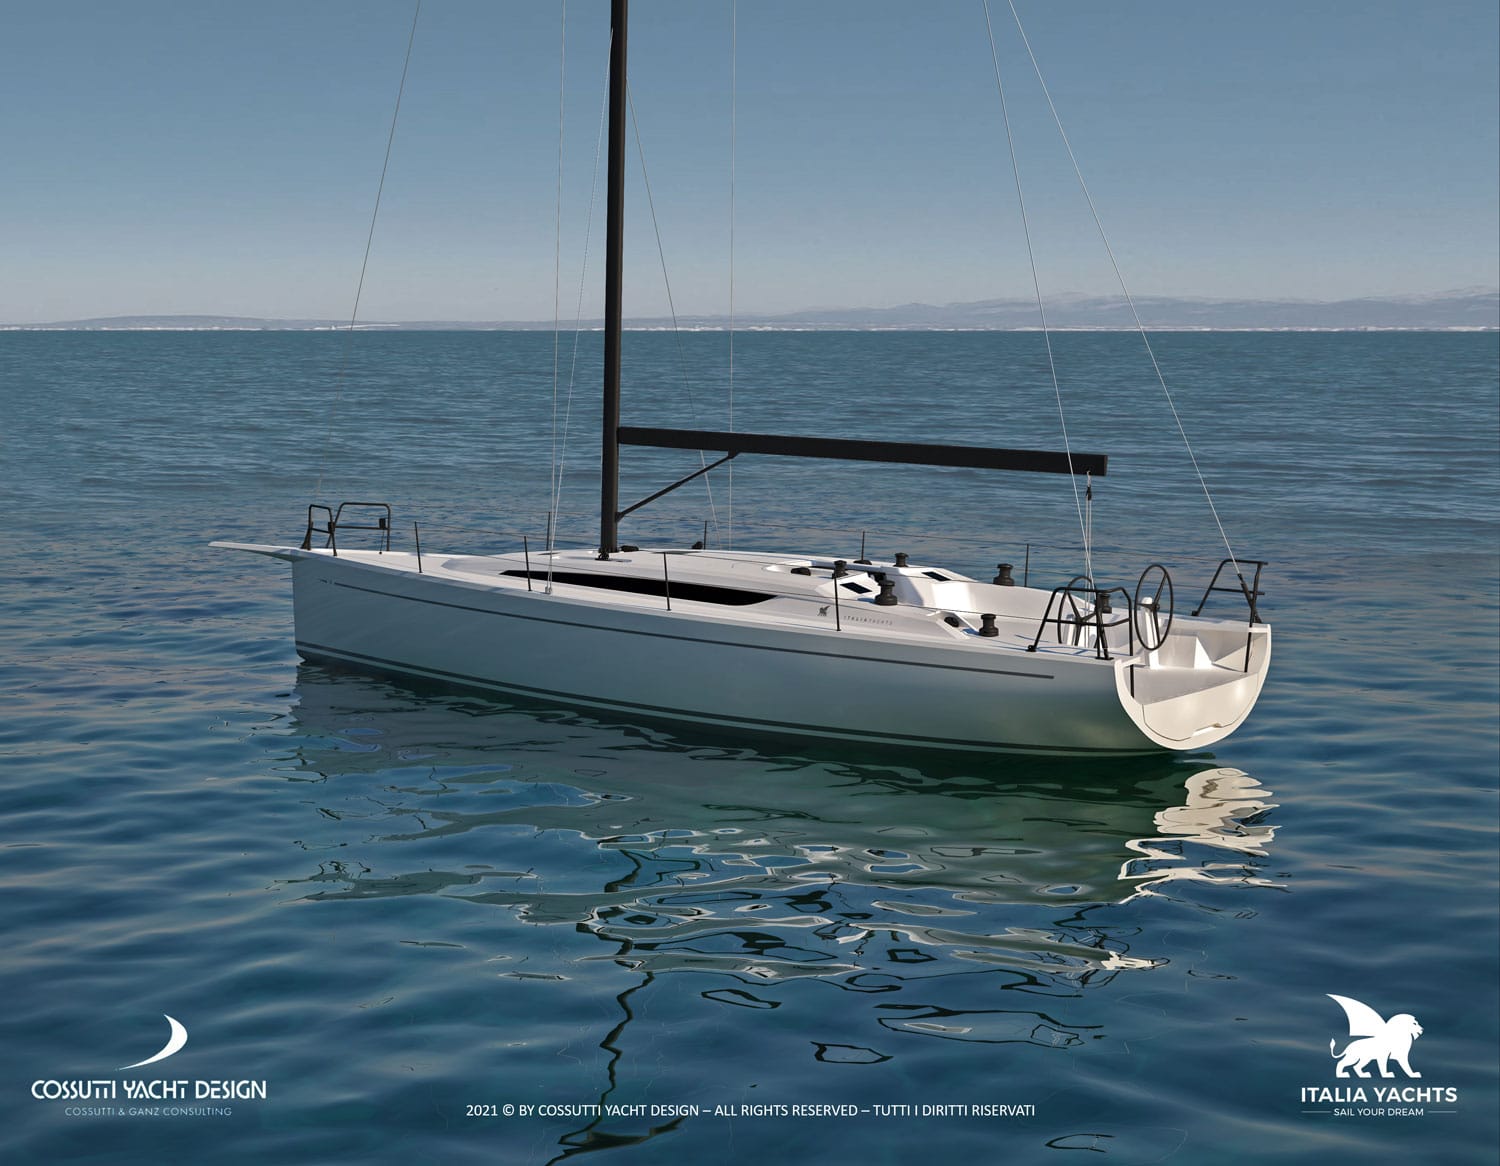 Italia yachts 12.98 by Cossutti Yacht Design